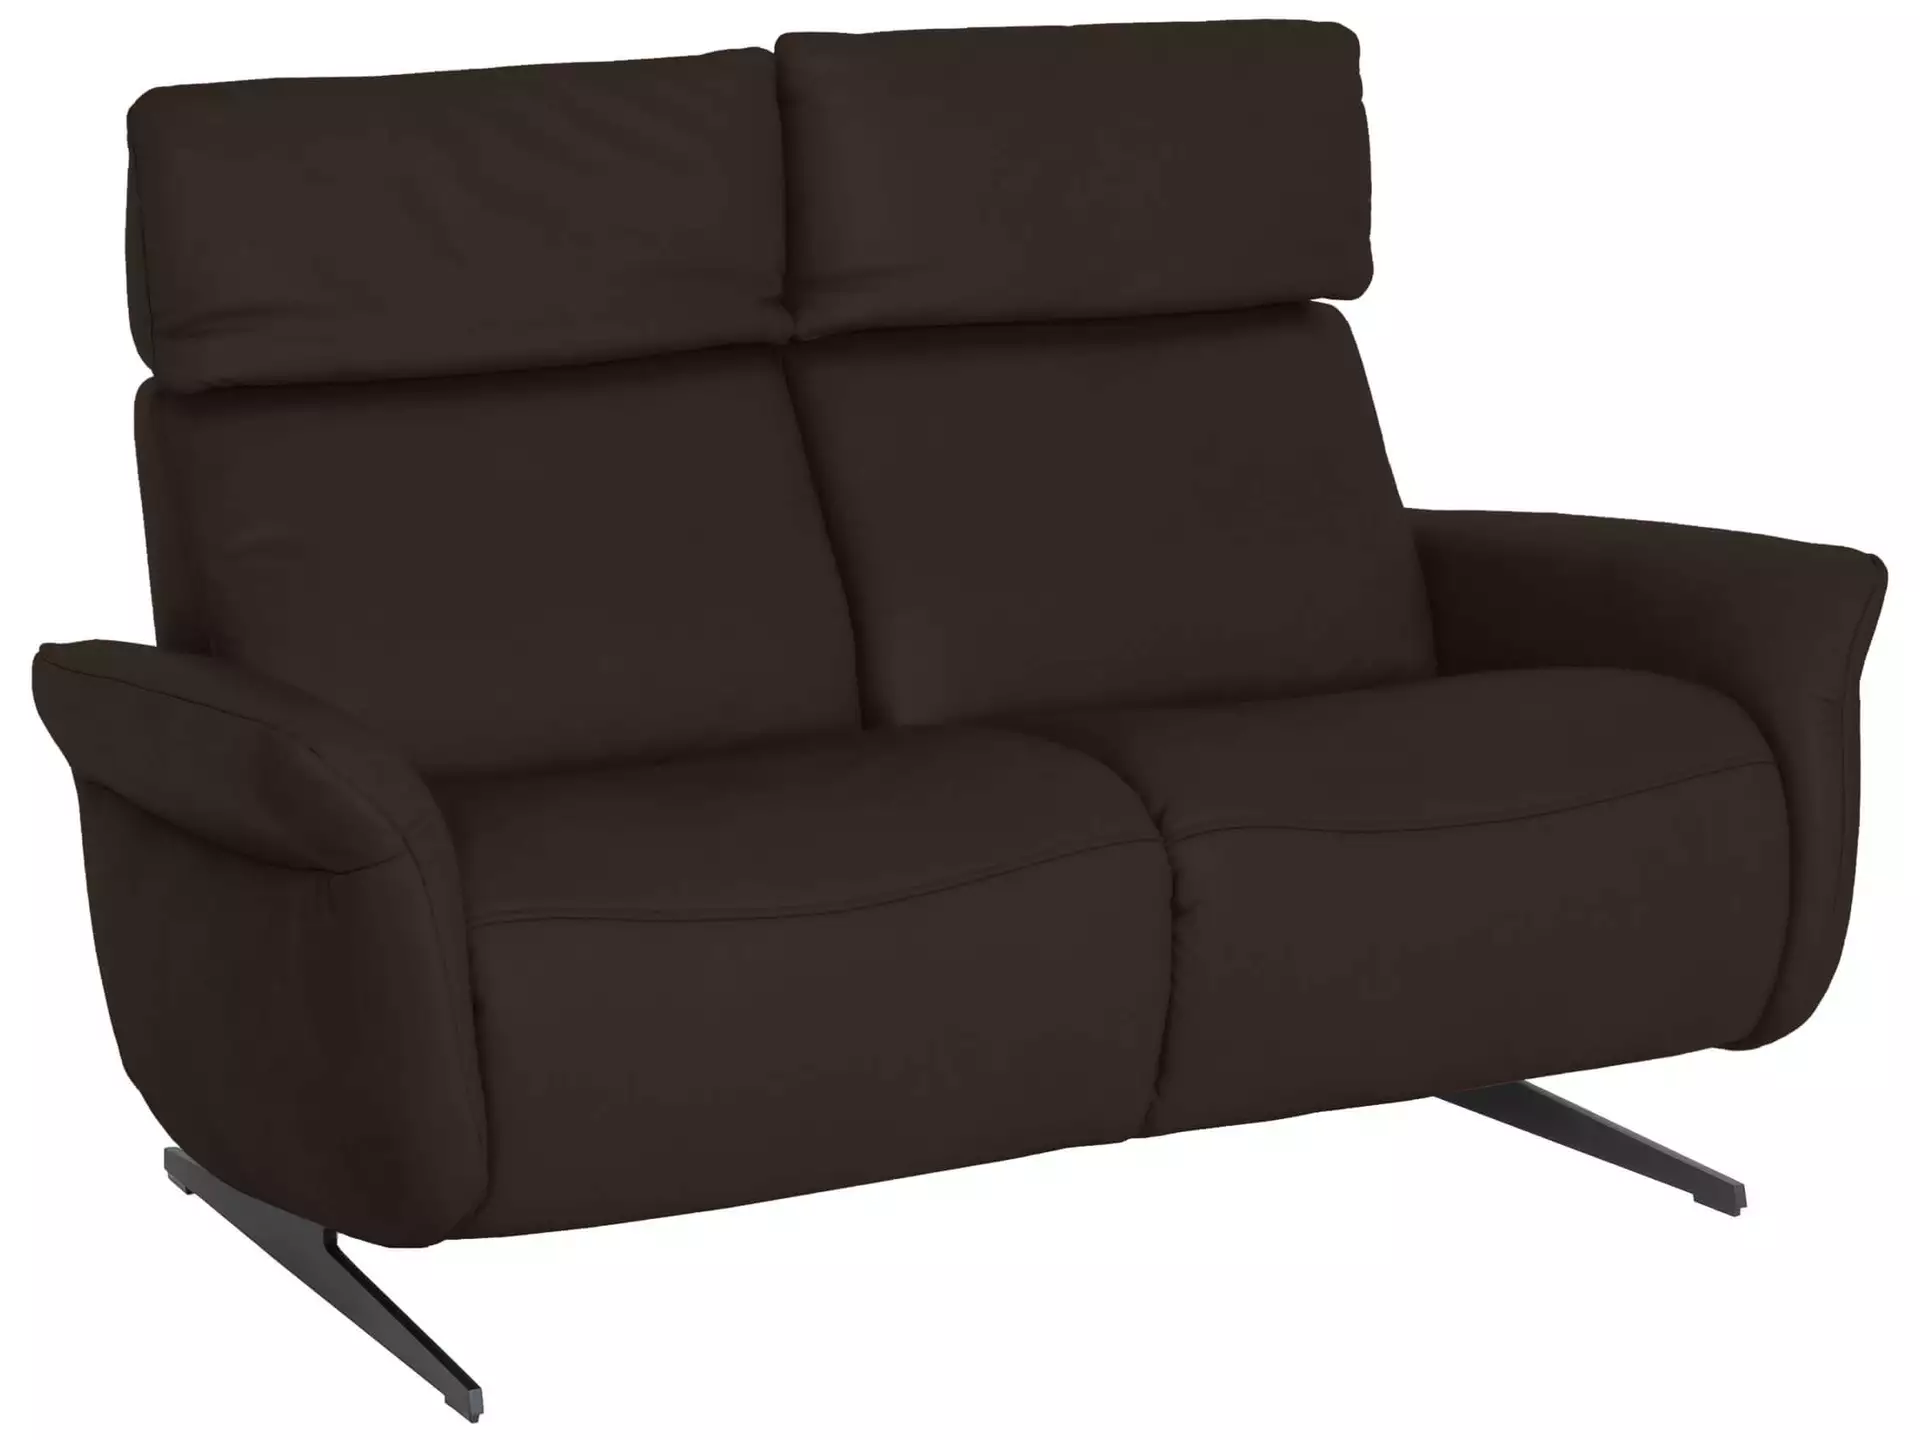 Sofa Patricia Basic B: 149 cm Himolla / Farbe: Schoko / Material: Leder Basic